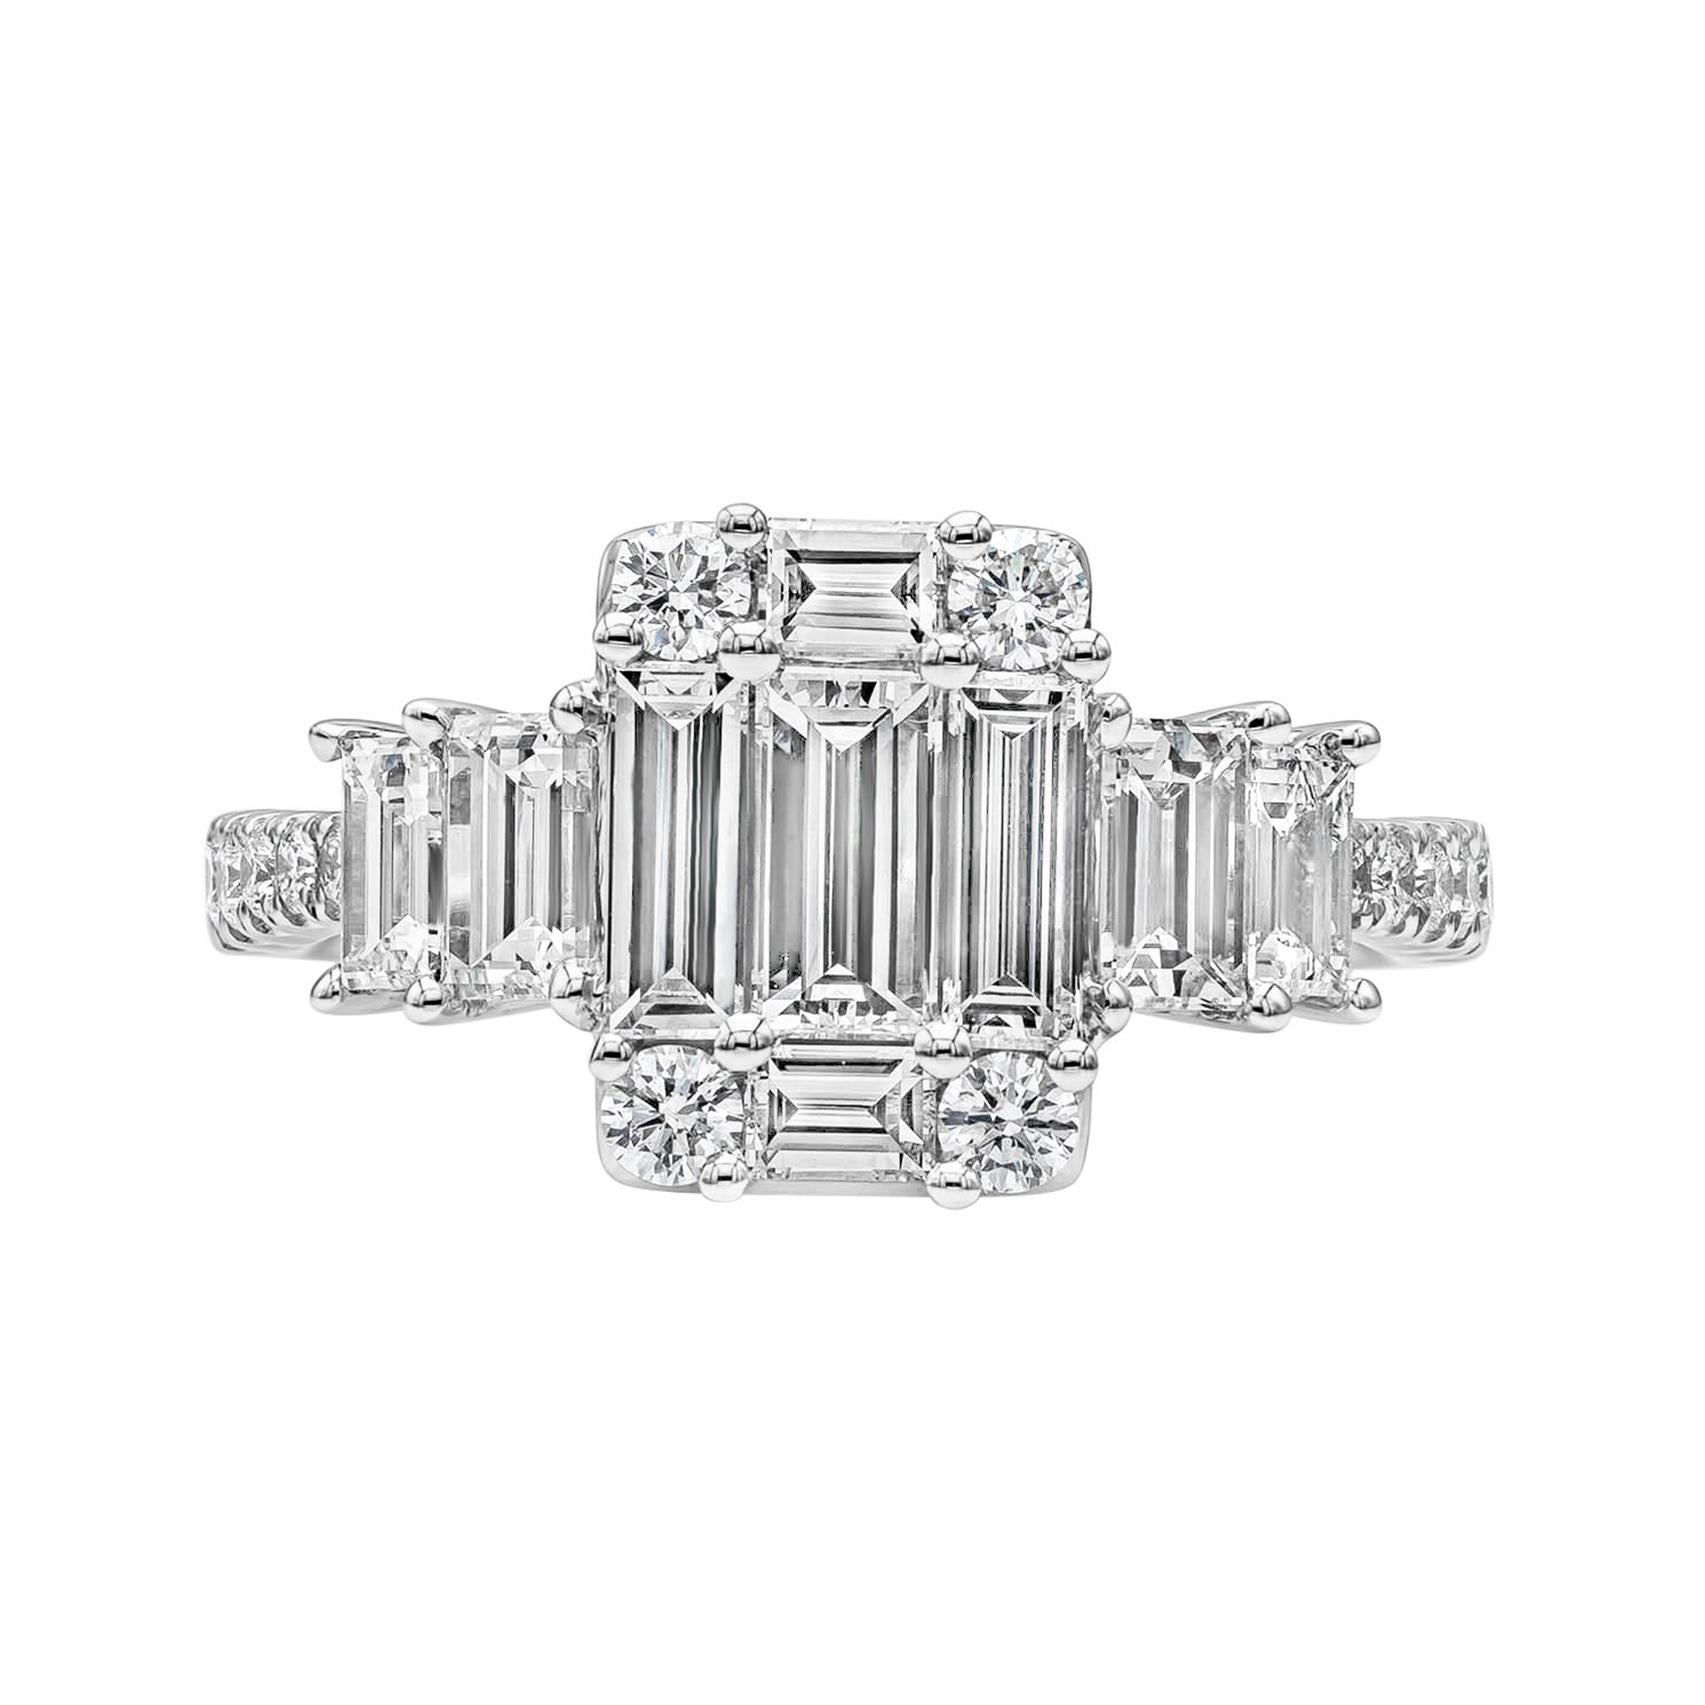 1.51 Carats Total Baguette Cut Illusion Diamond Cluster Engagement Ring